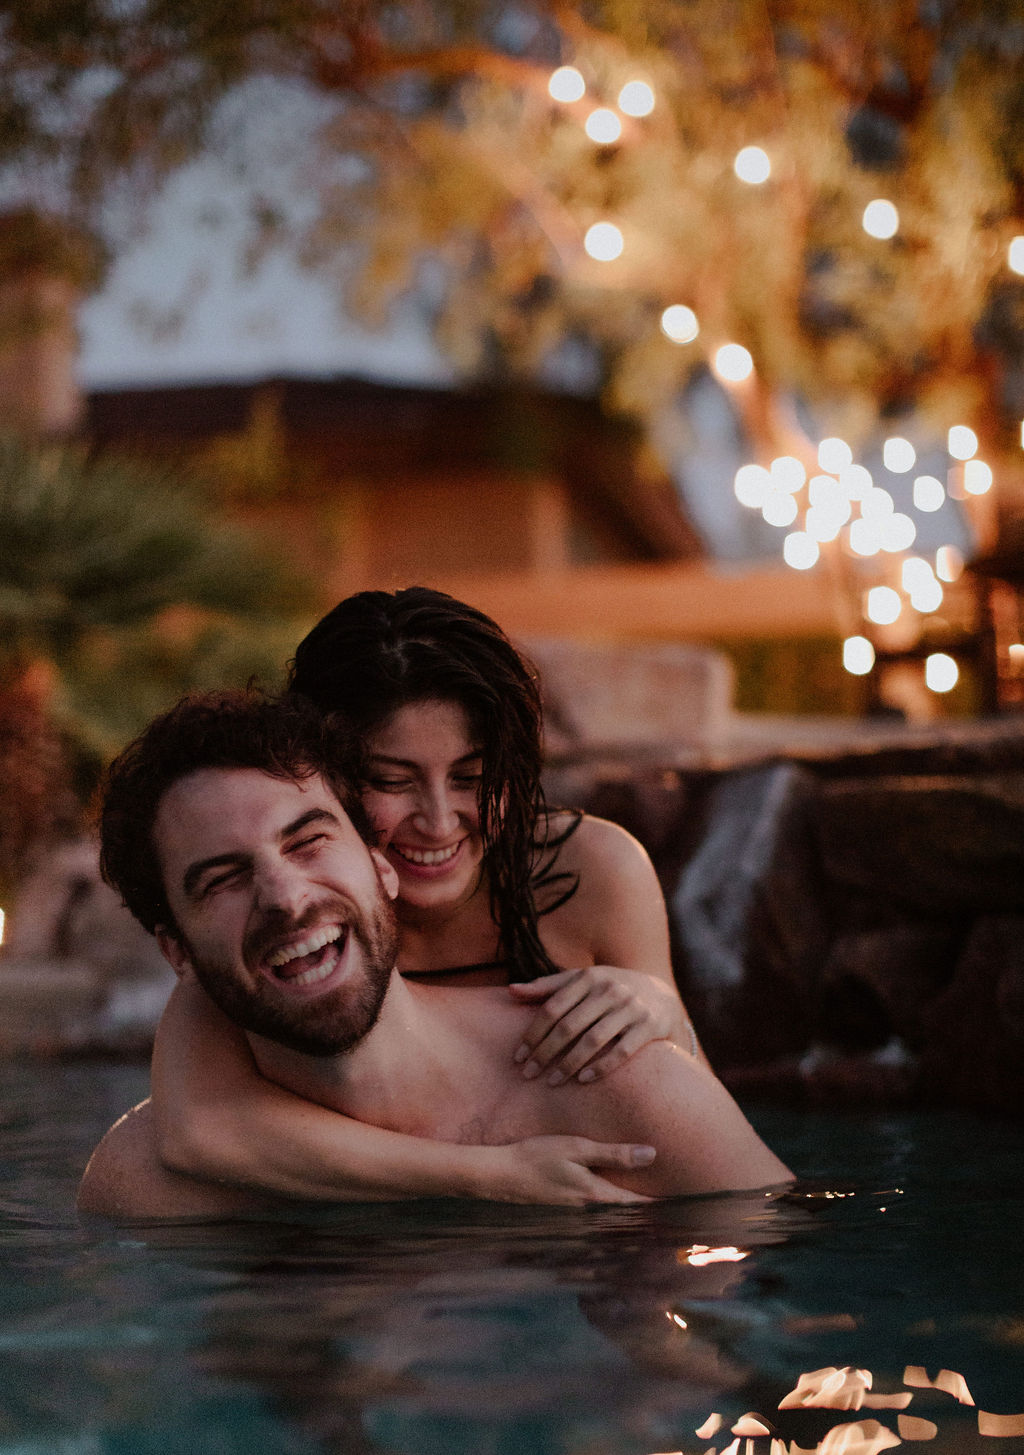 Moody and Joyful Las Vegas Poolside Engagement Shoot